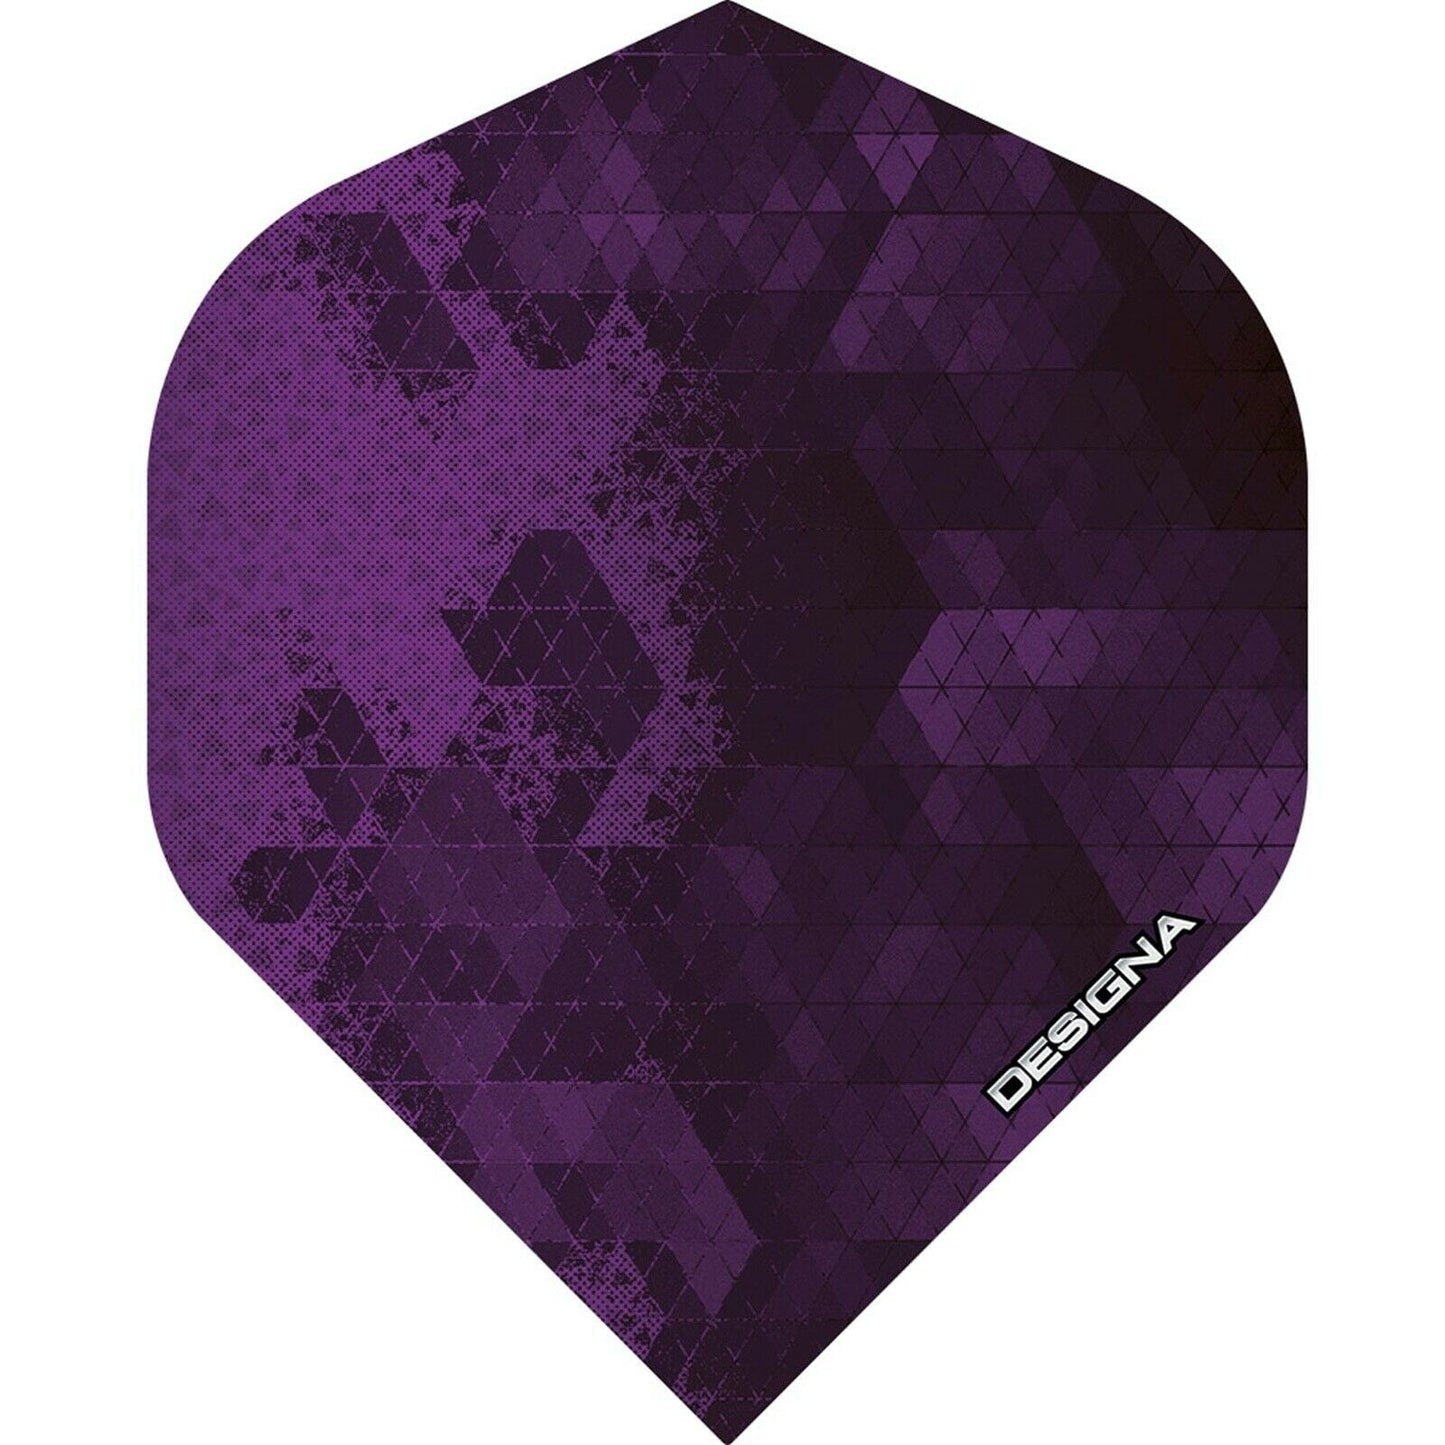 Designa Rock Dart Flights - 100 Micron - No2 - Std Purple